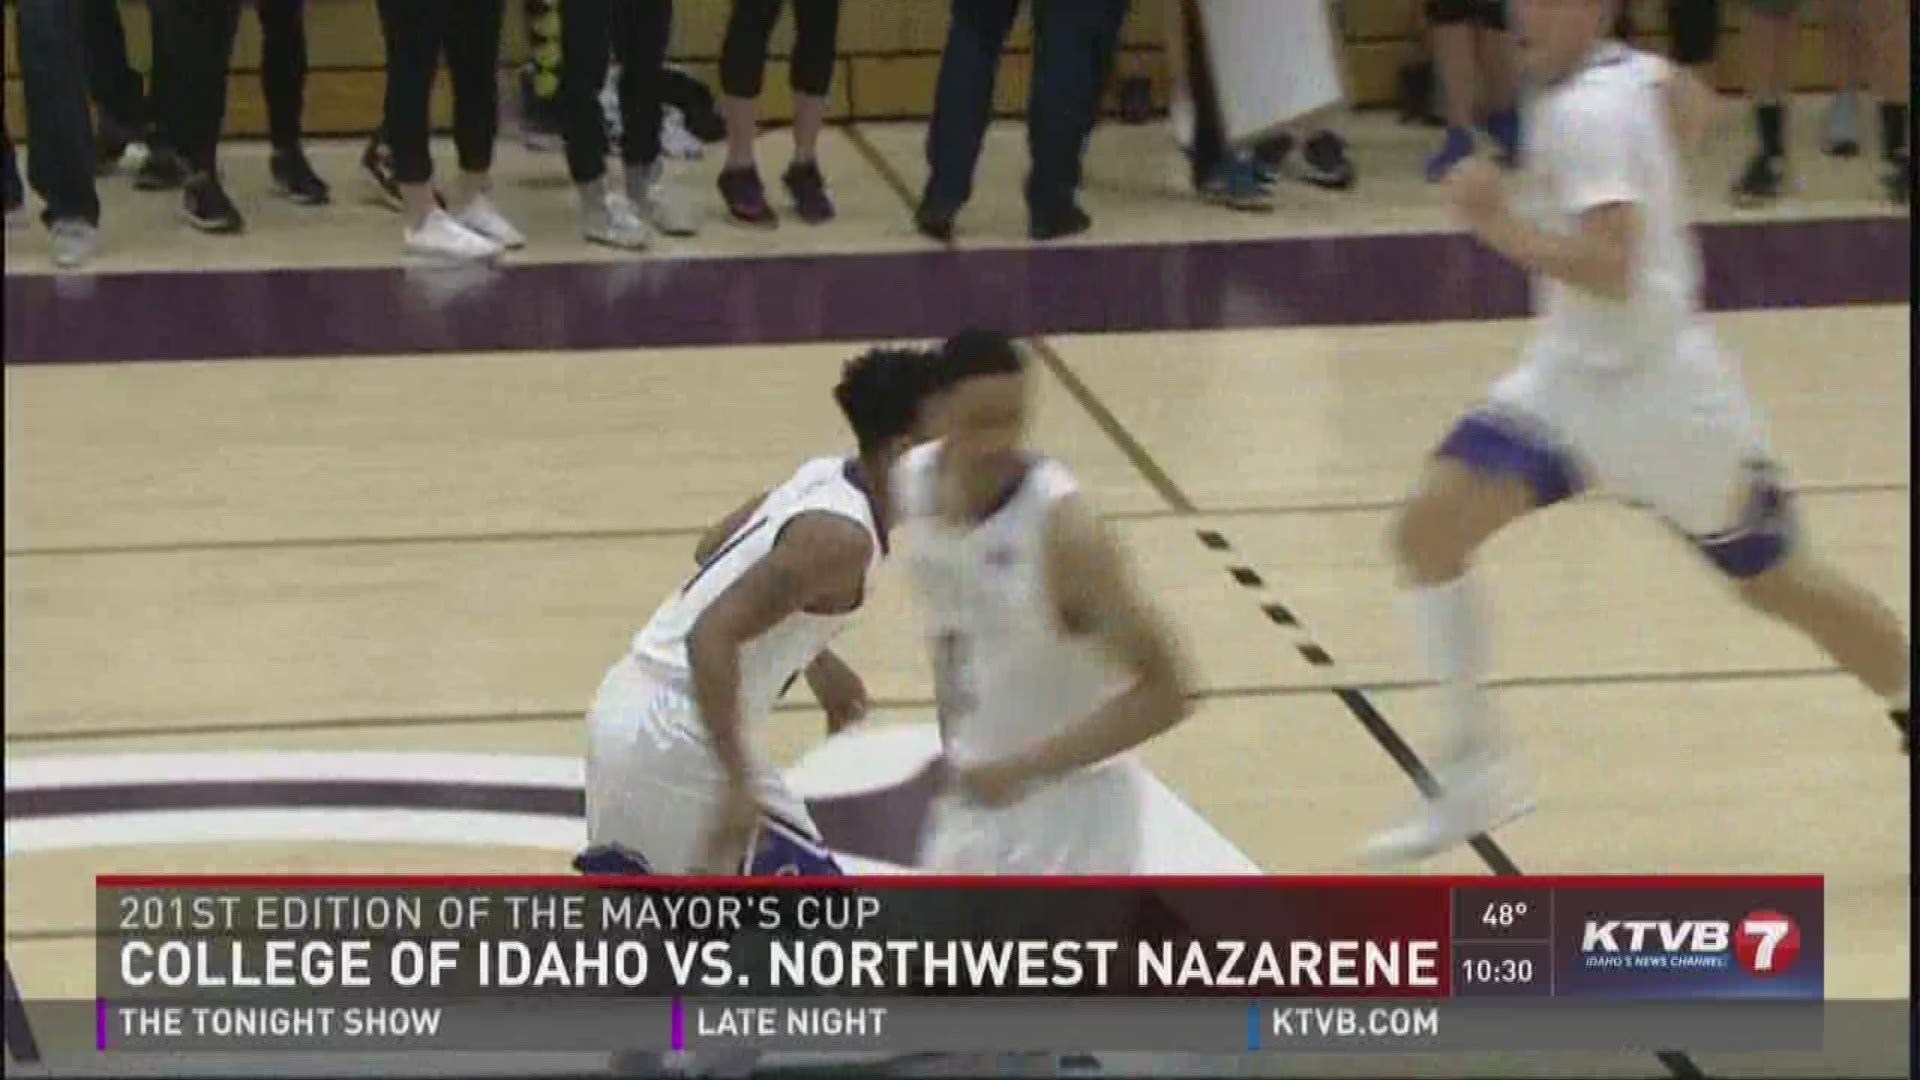 College of Idaho vs. Northwest Nazarene University in Idaho's oldest college rivalry.